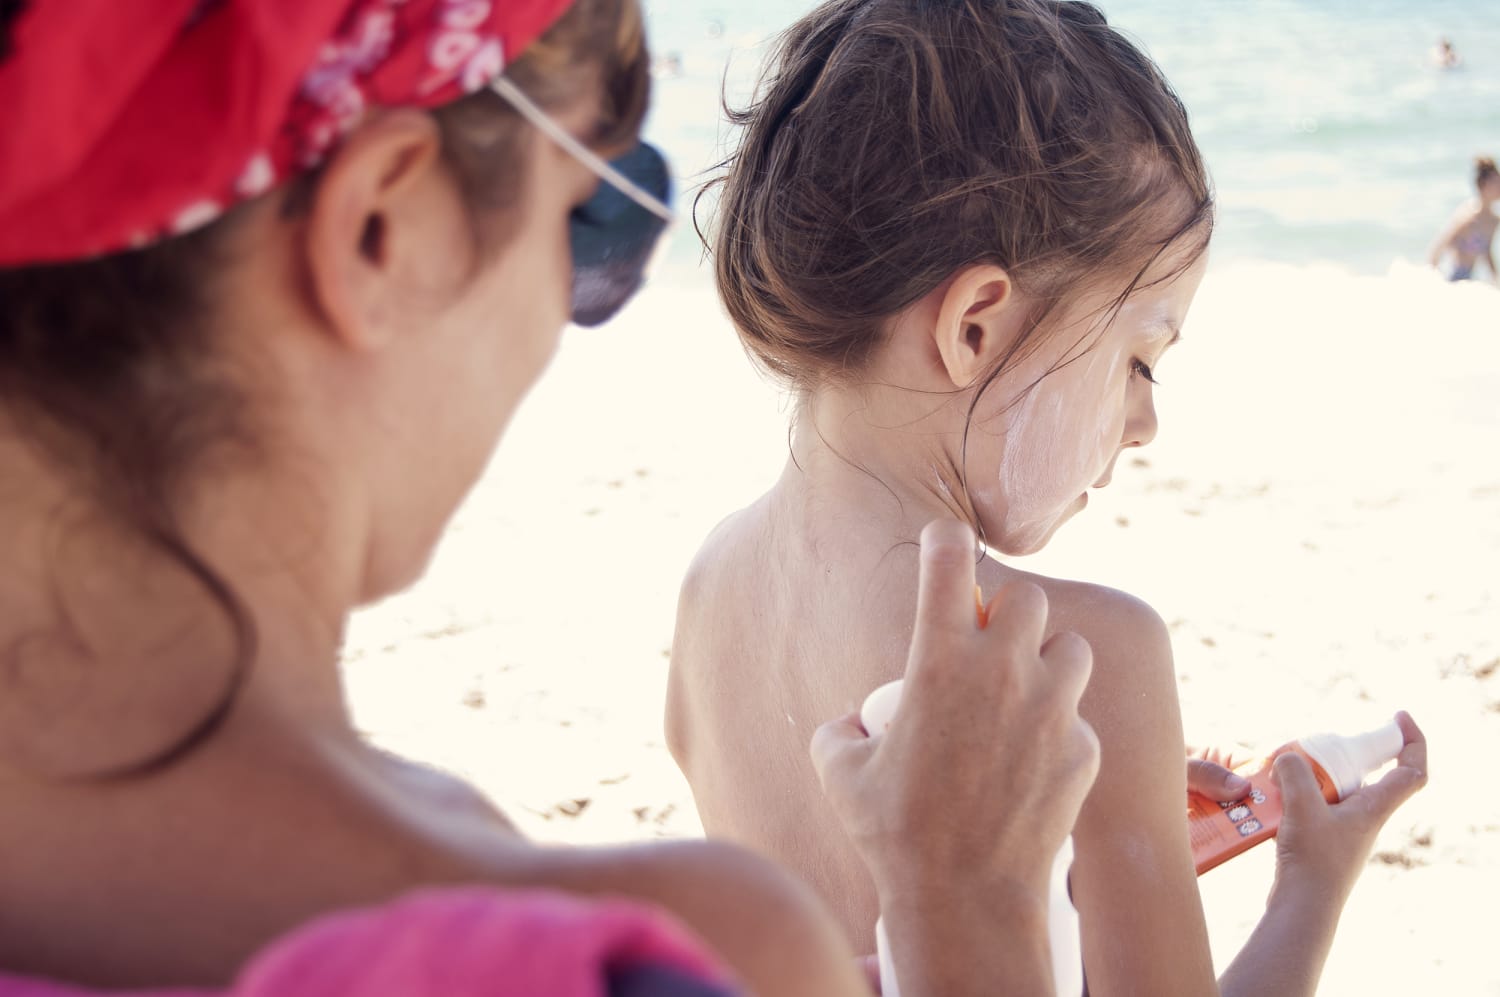 sunscreen for children's faces